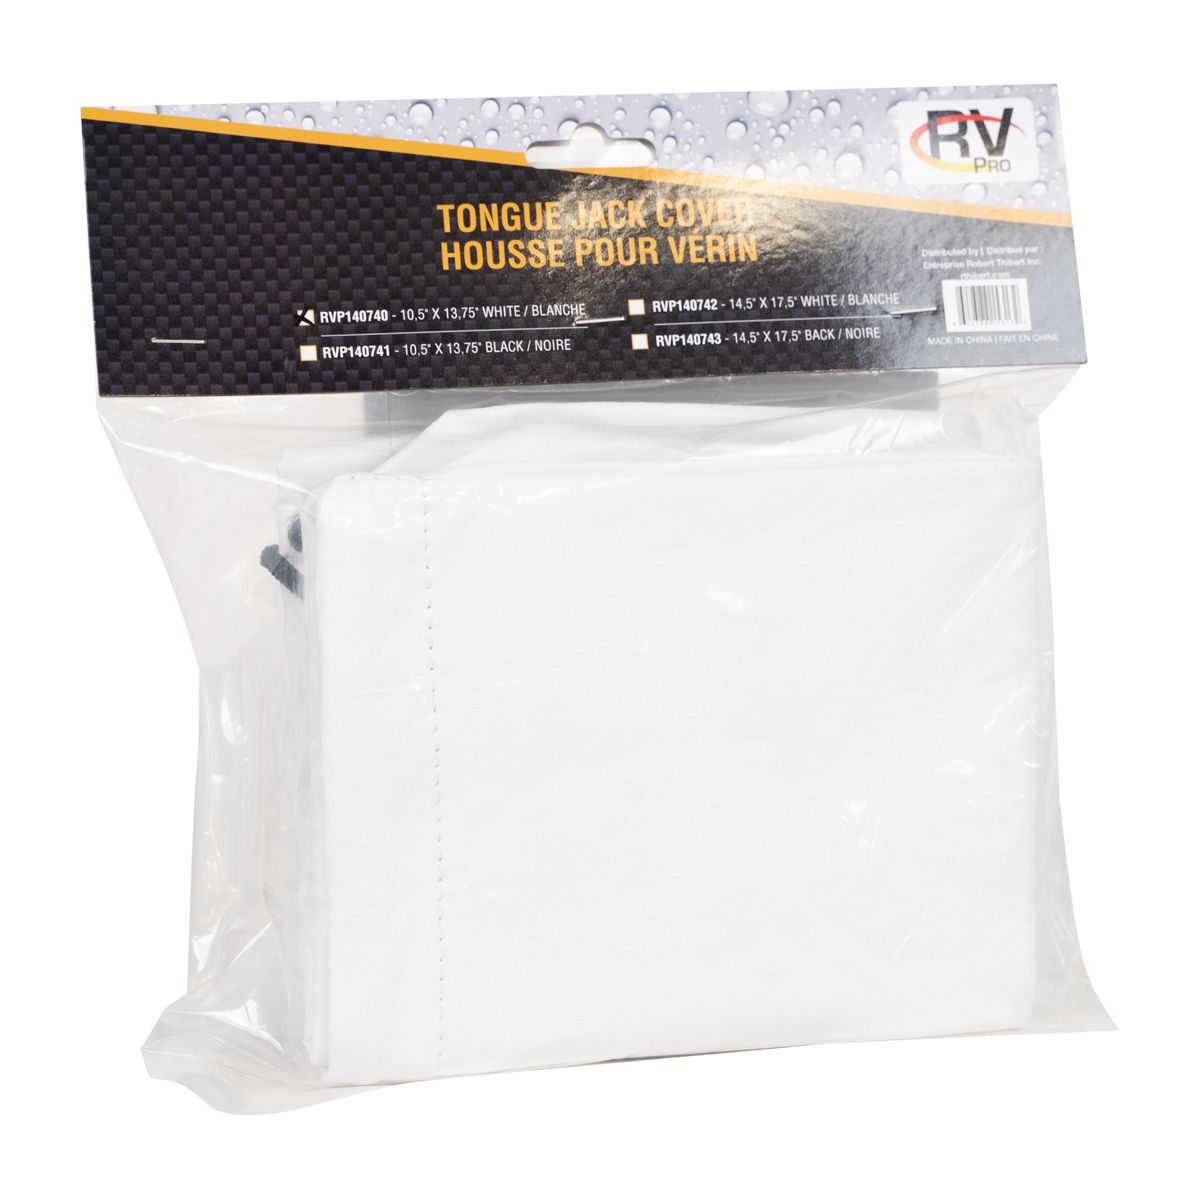 RV Pro TJC-1 Electric Jack Cover 10.5" X 13.75" White